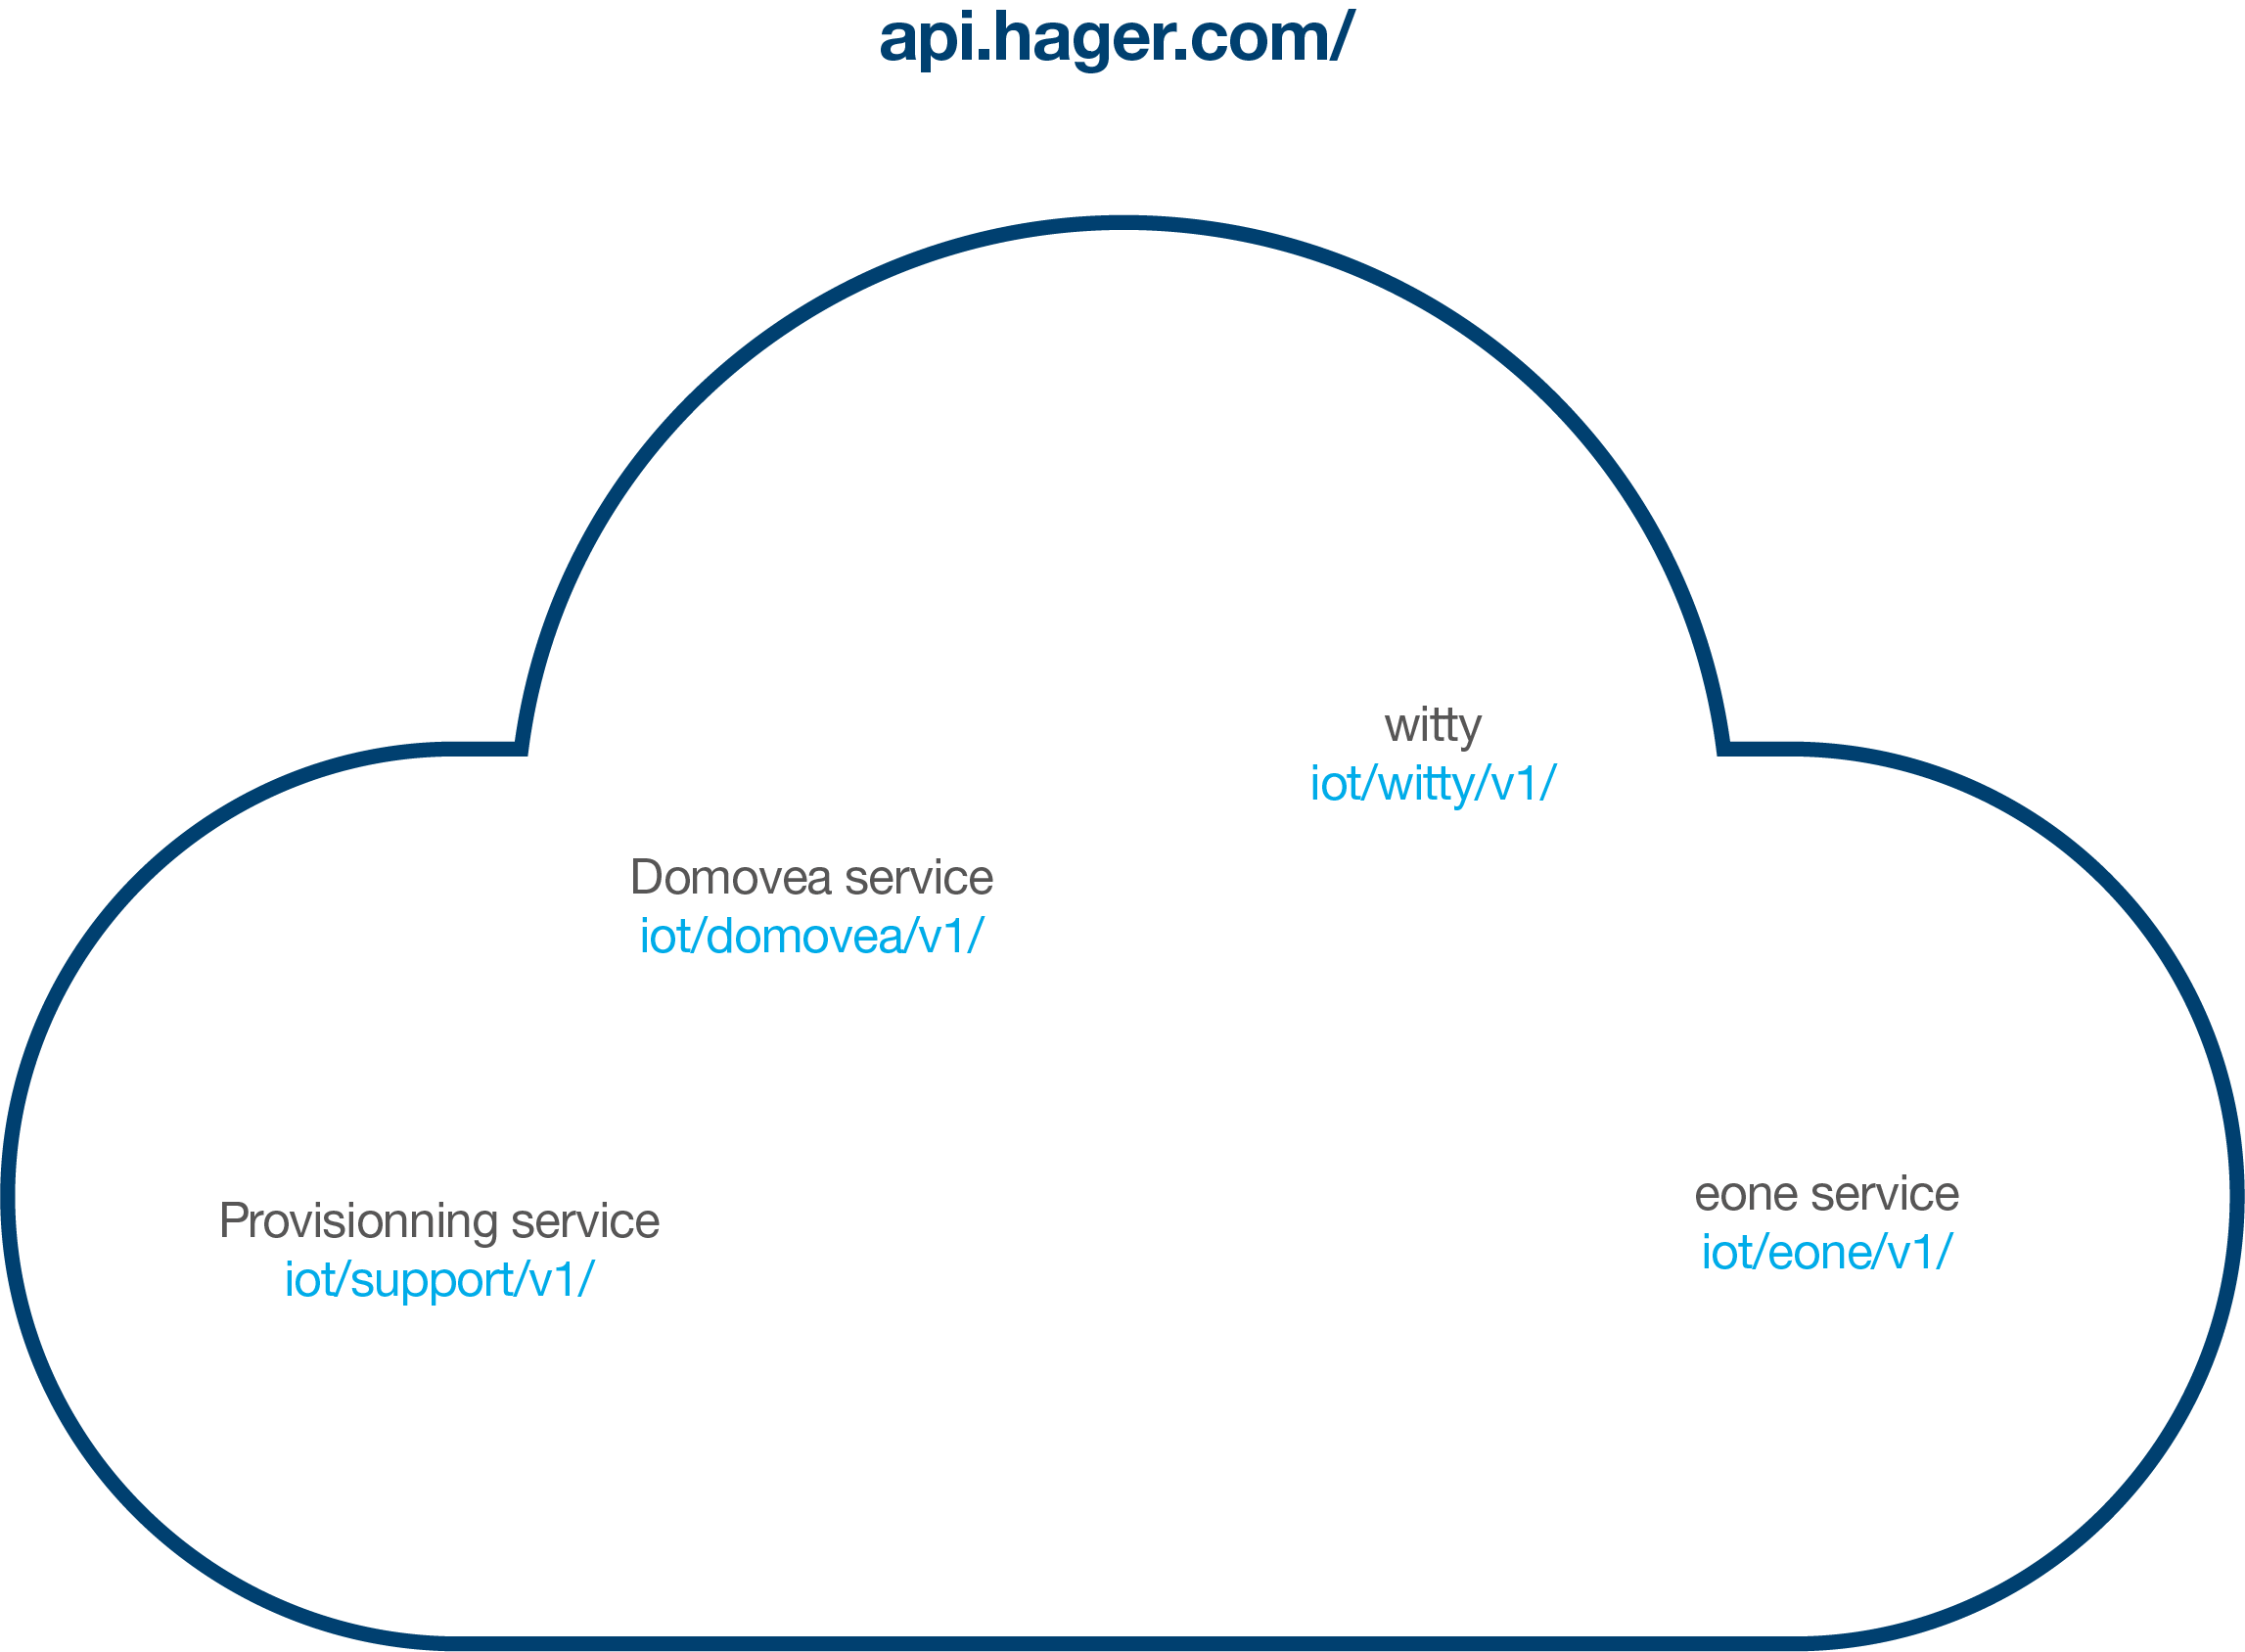 API Hager